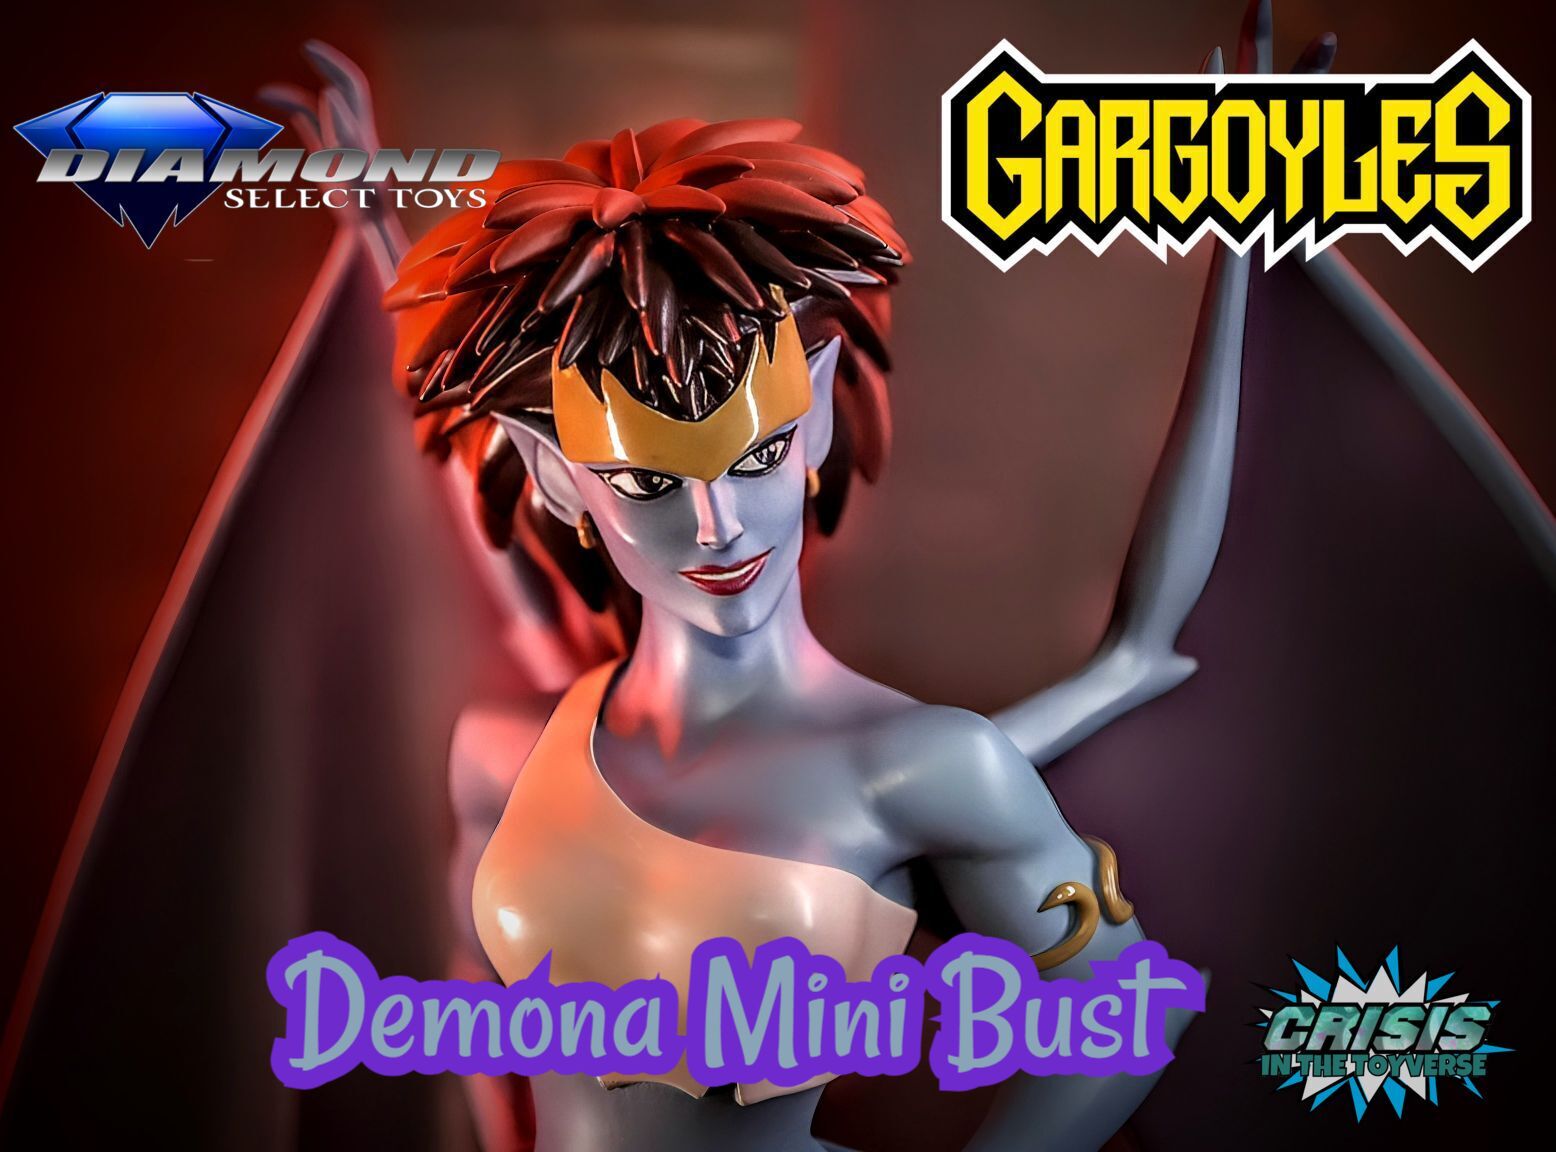 Diamond Select Toys Demona Mini Bust